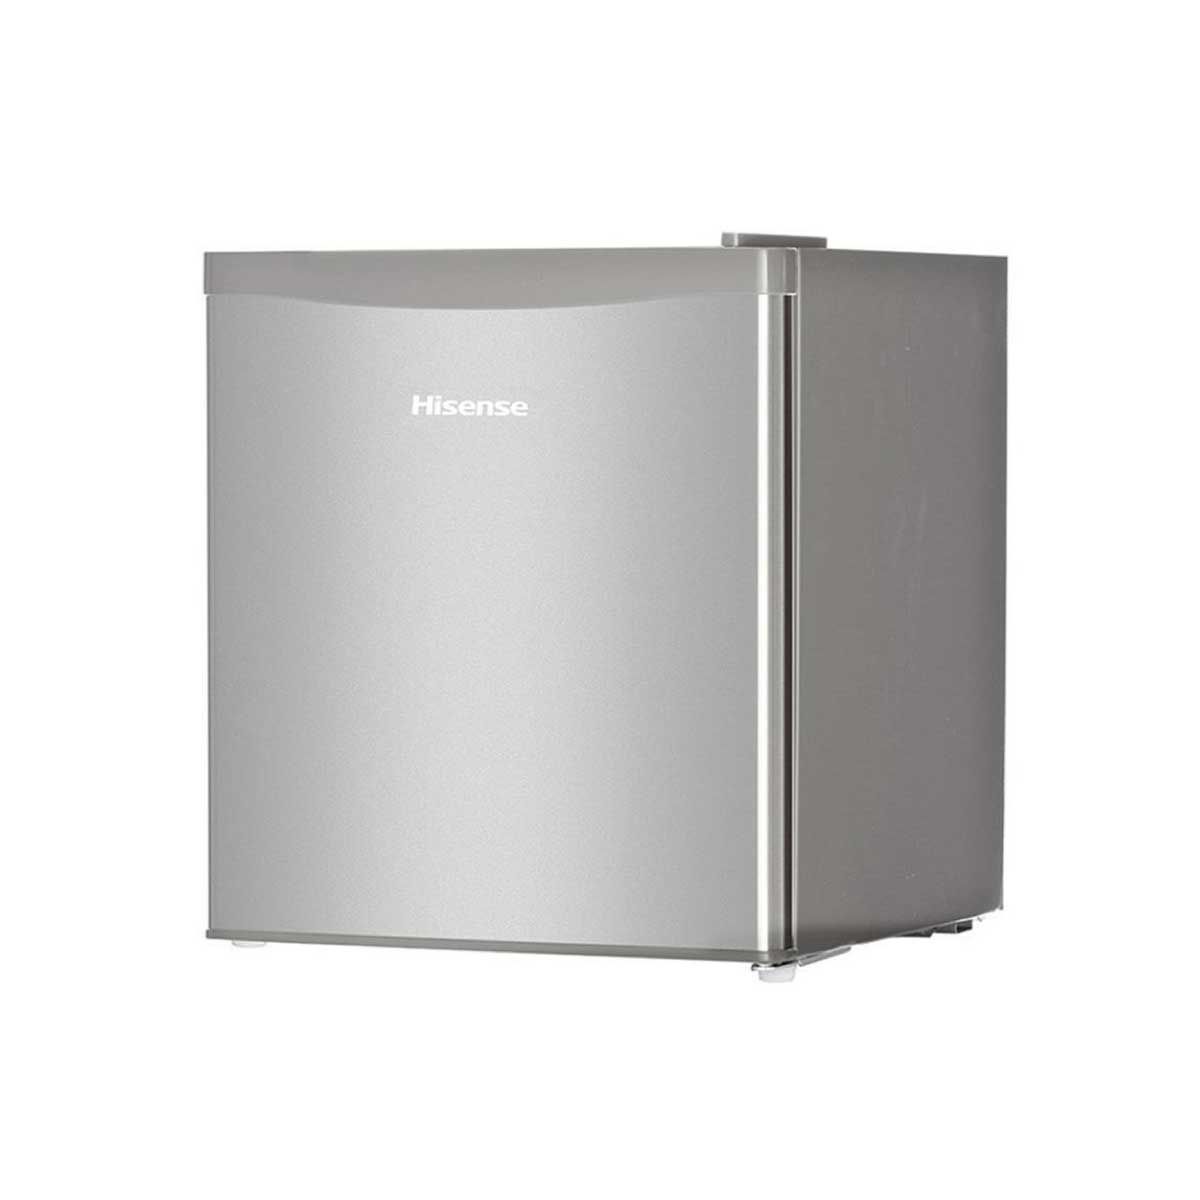 HISENSE ตู้เย็น MINIBAR 1.6Q สีเงิน รุ่นRR61D4TGN